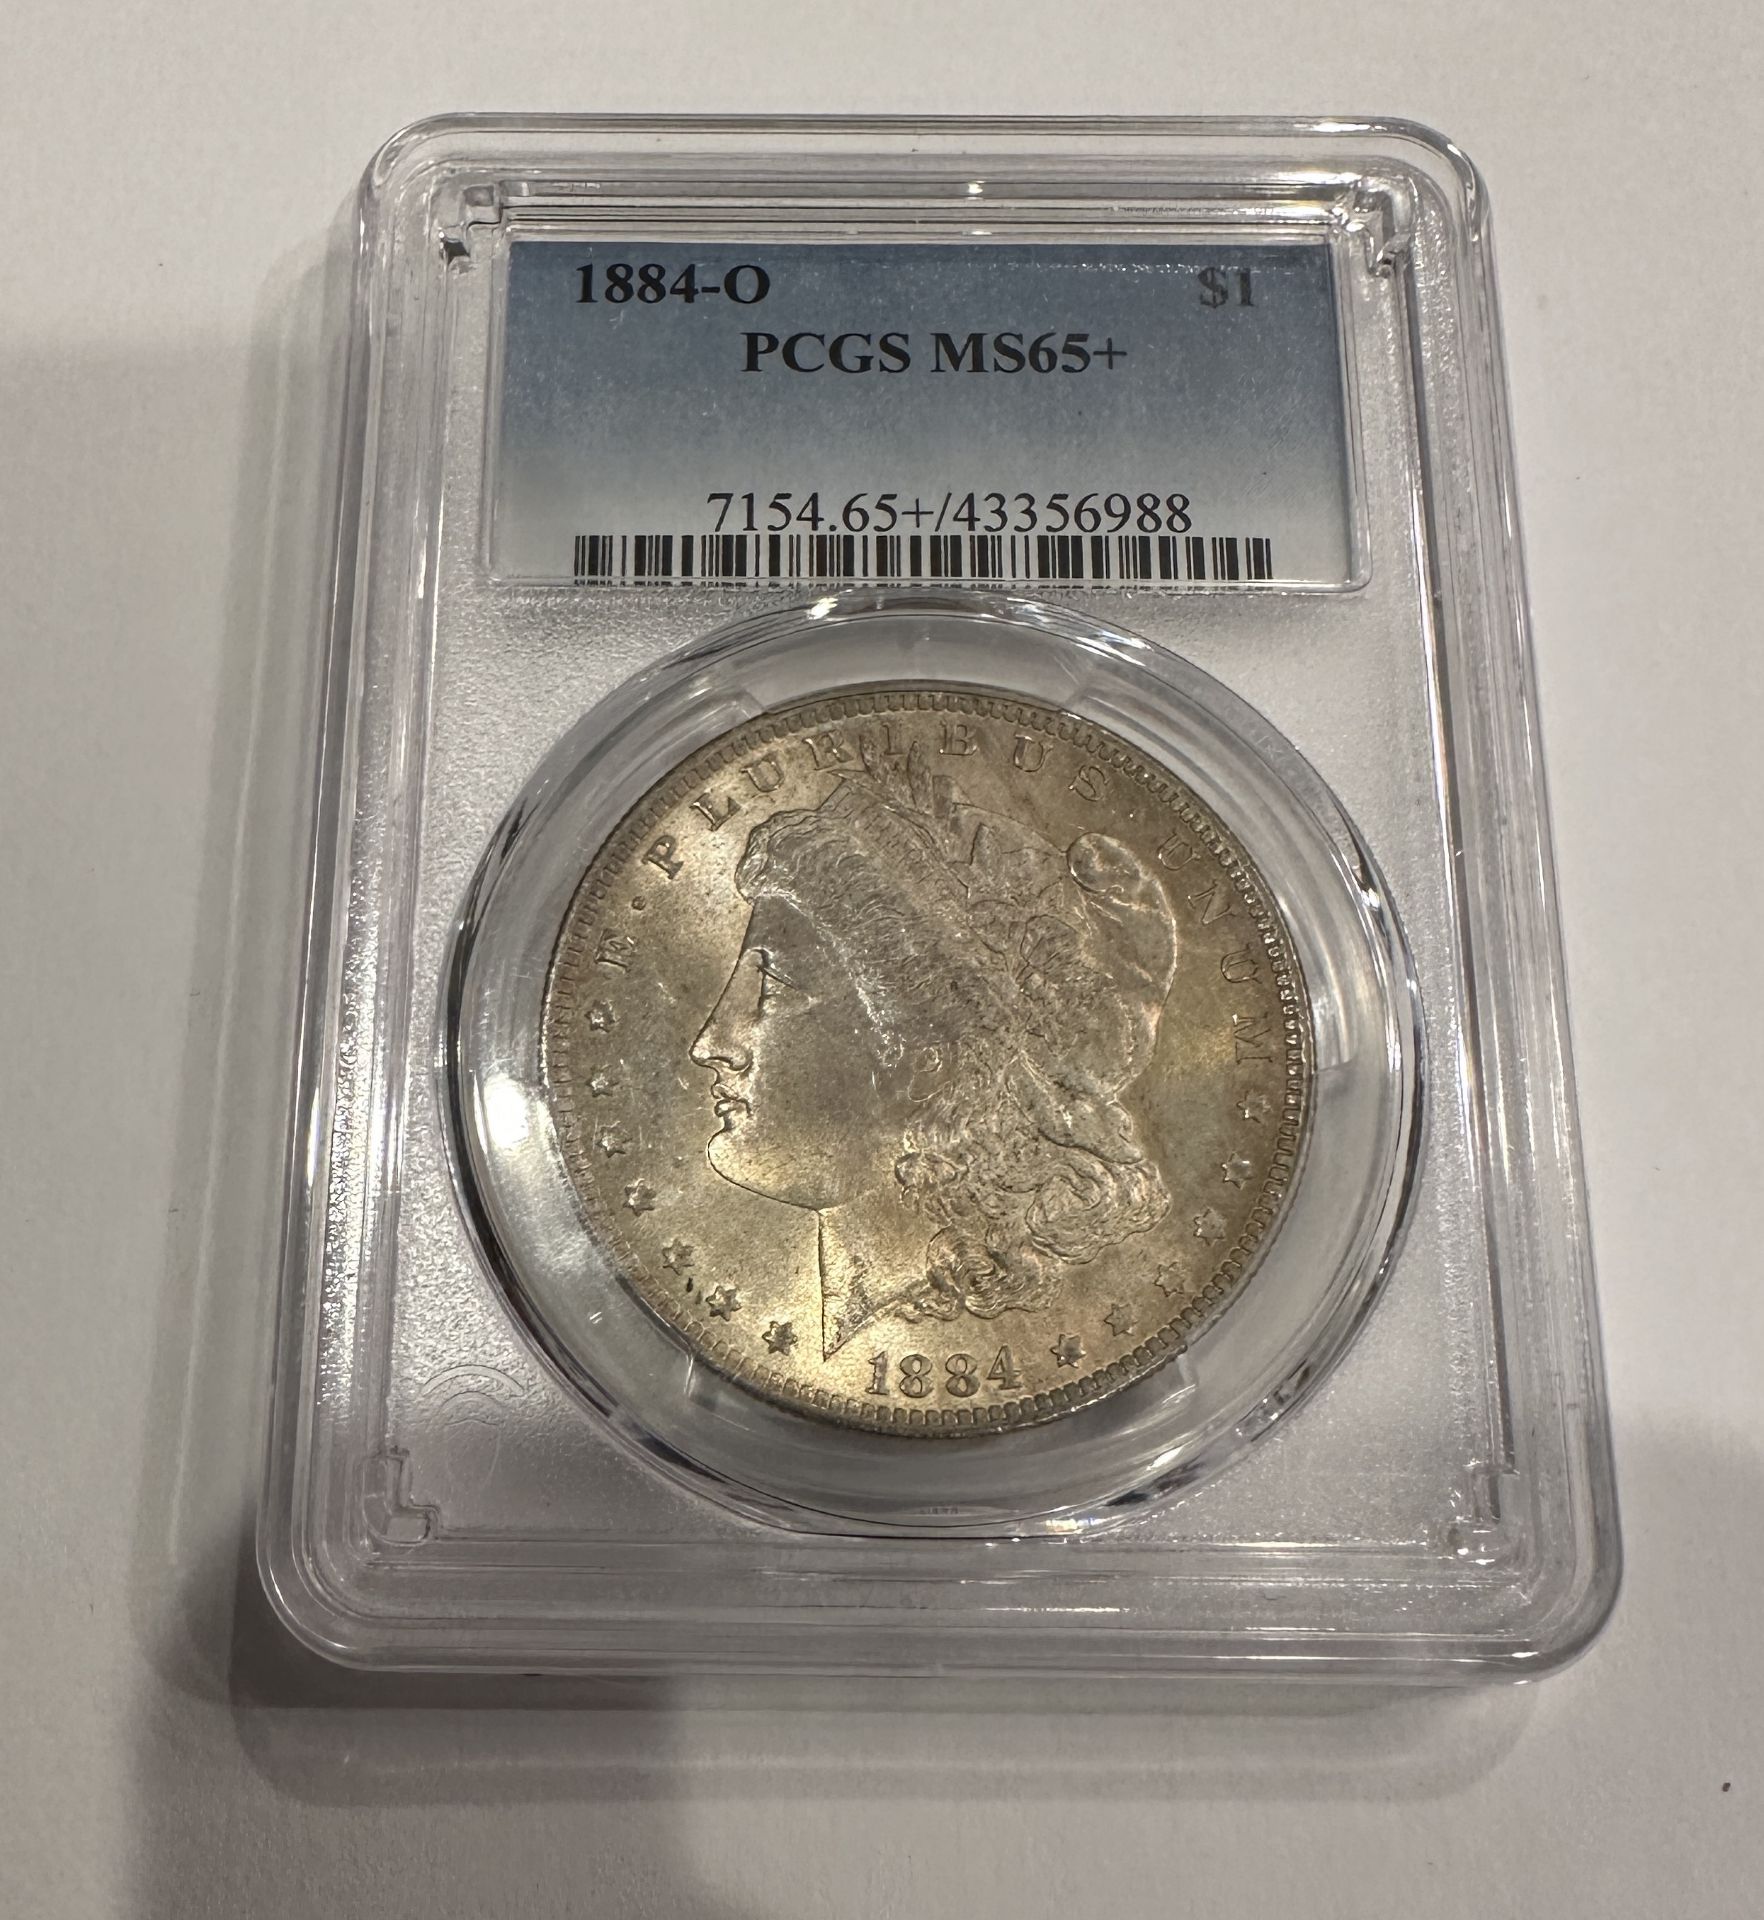 PCGS MS65+ 1884-O $1 COIN